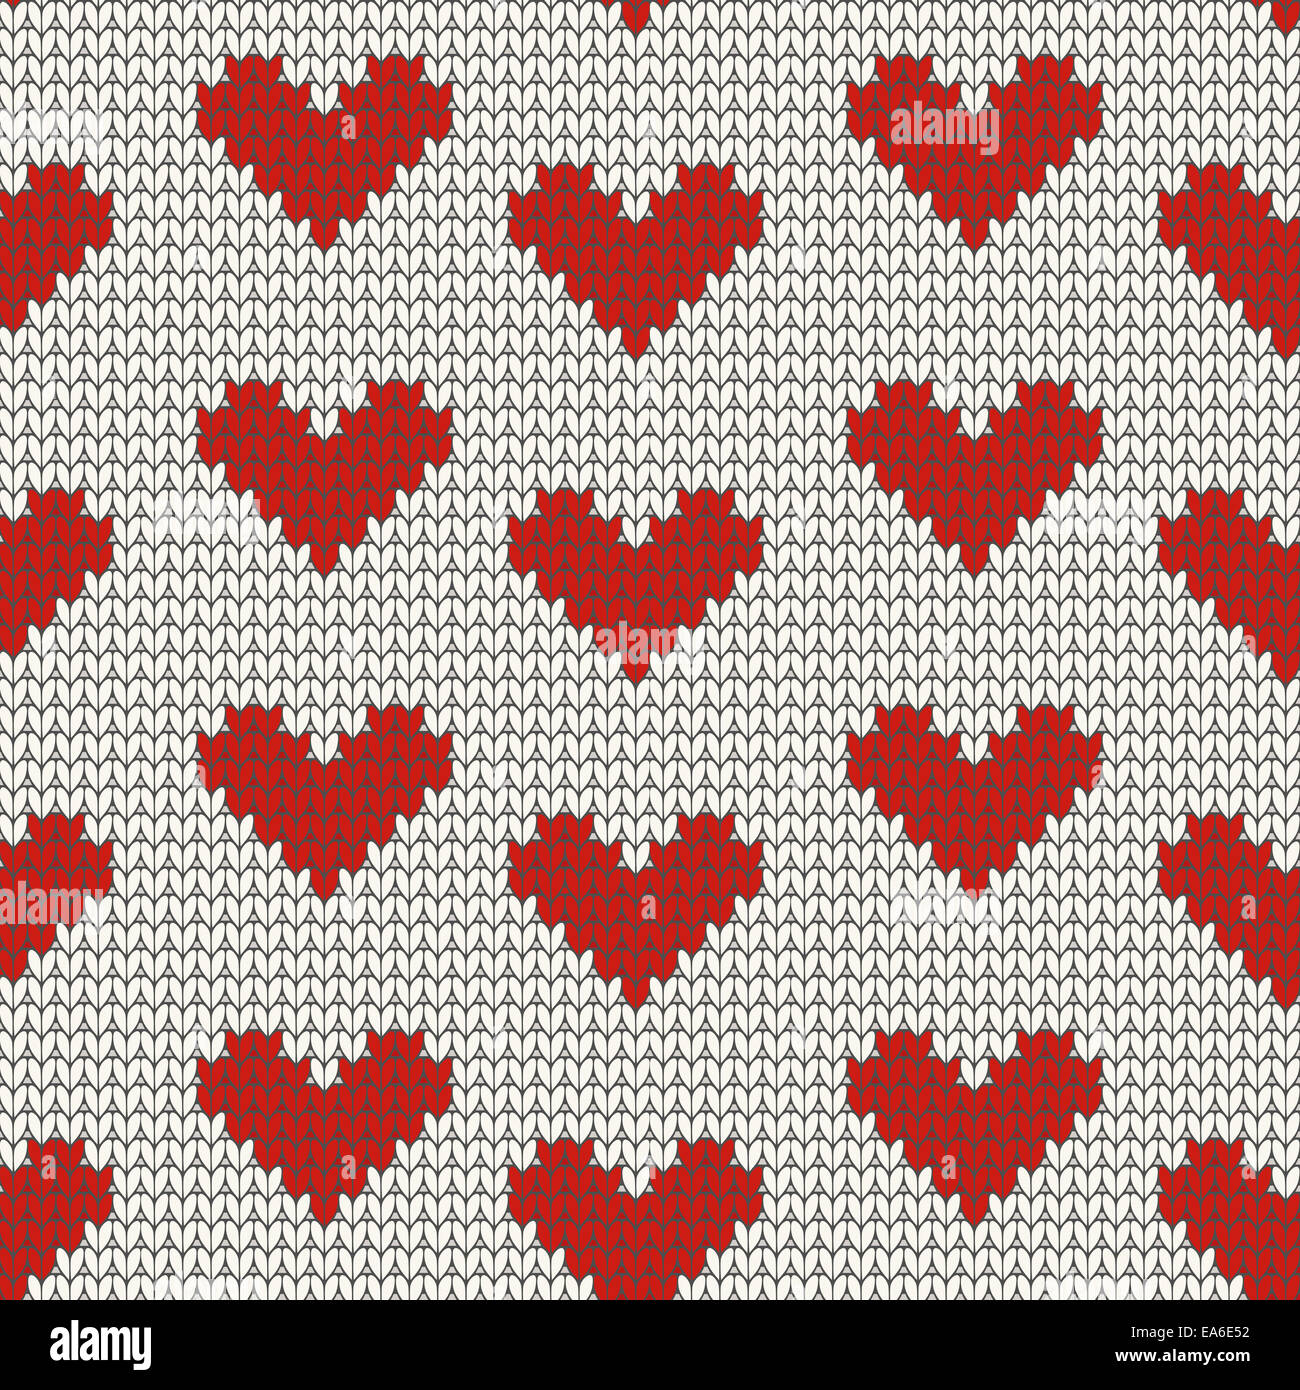 Seamless knitting pattern with Hearts Stock Photo